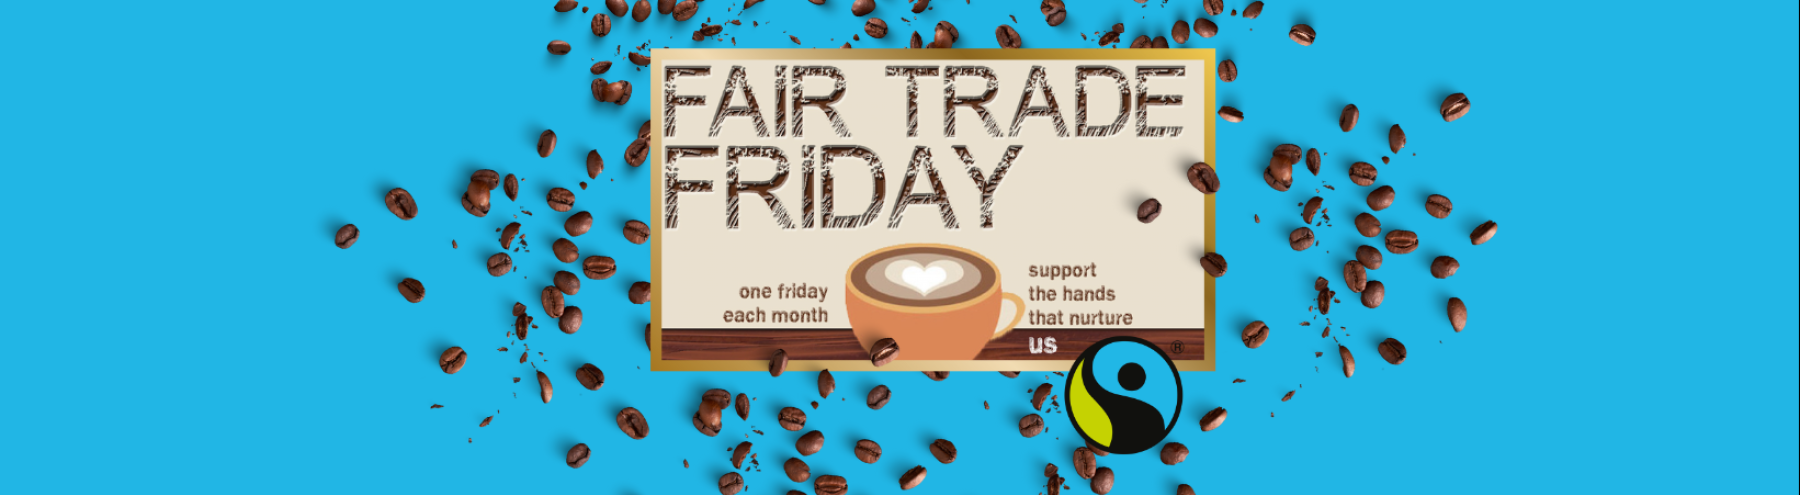 Fair Trade Fridays